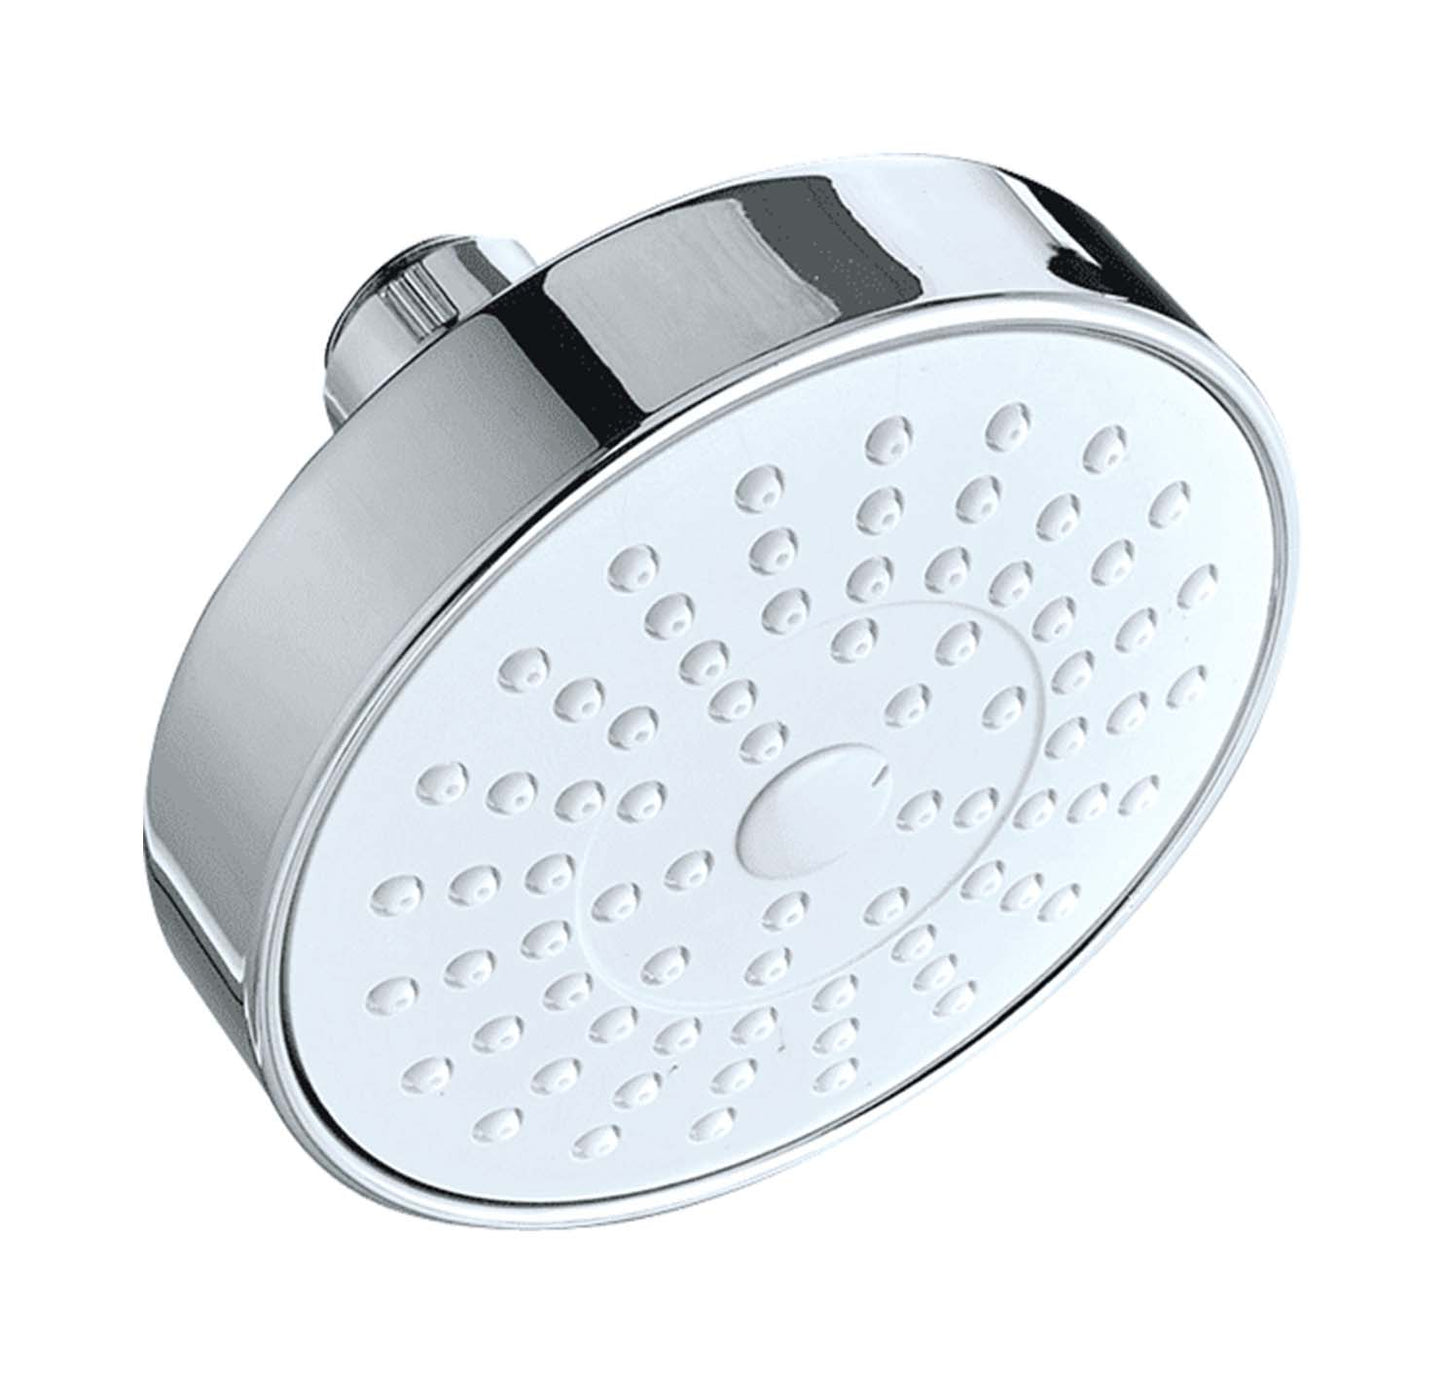 Astral Bathware Overhead Shower 90mm ABS